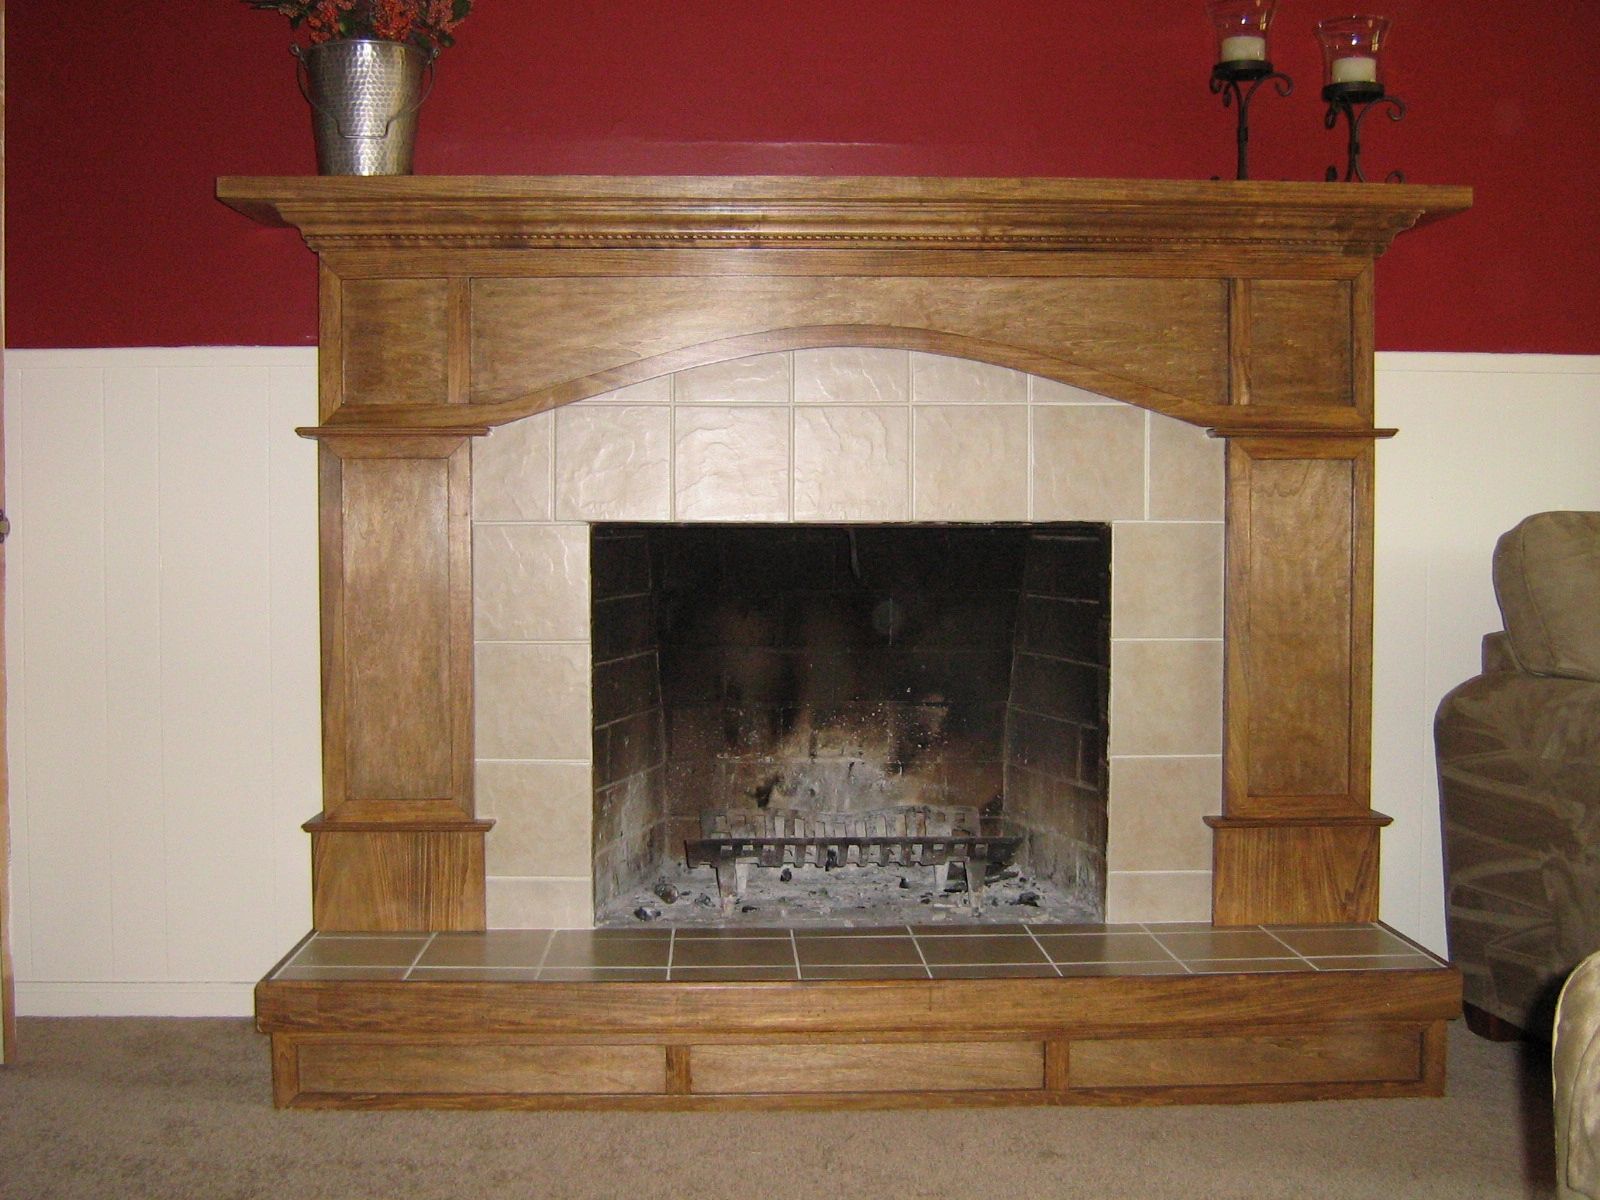 Coopersburg_fireplace.jpg